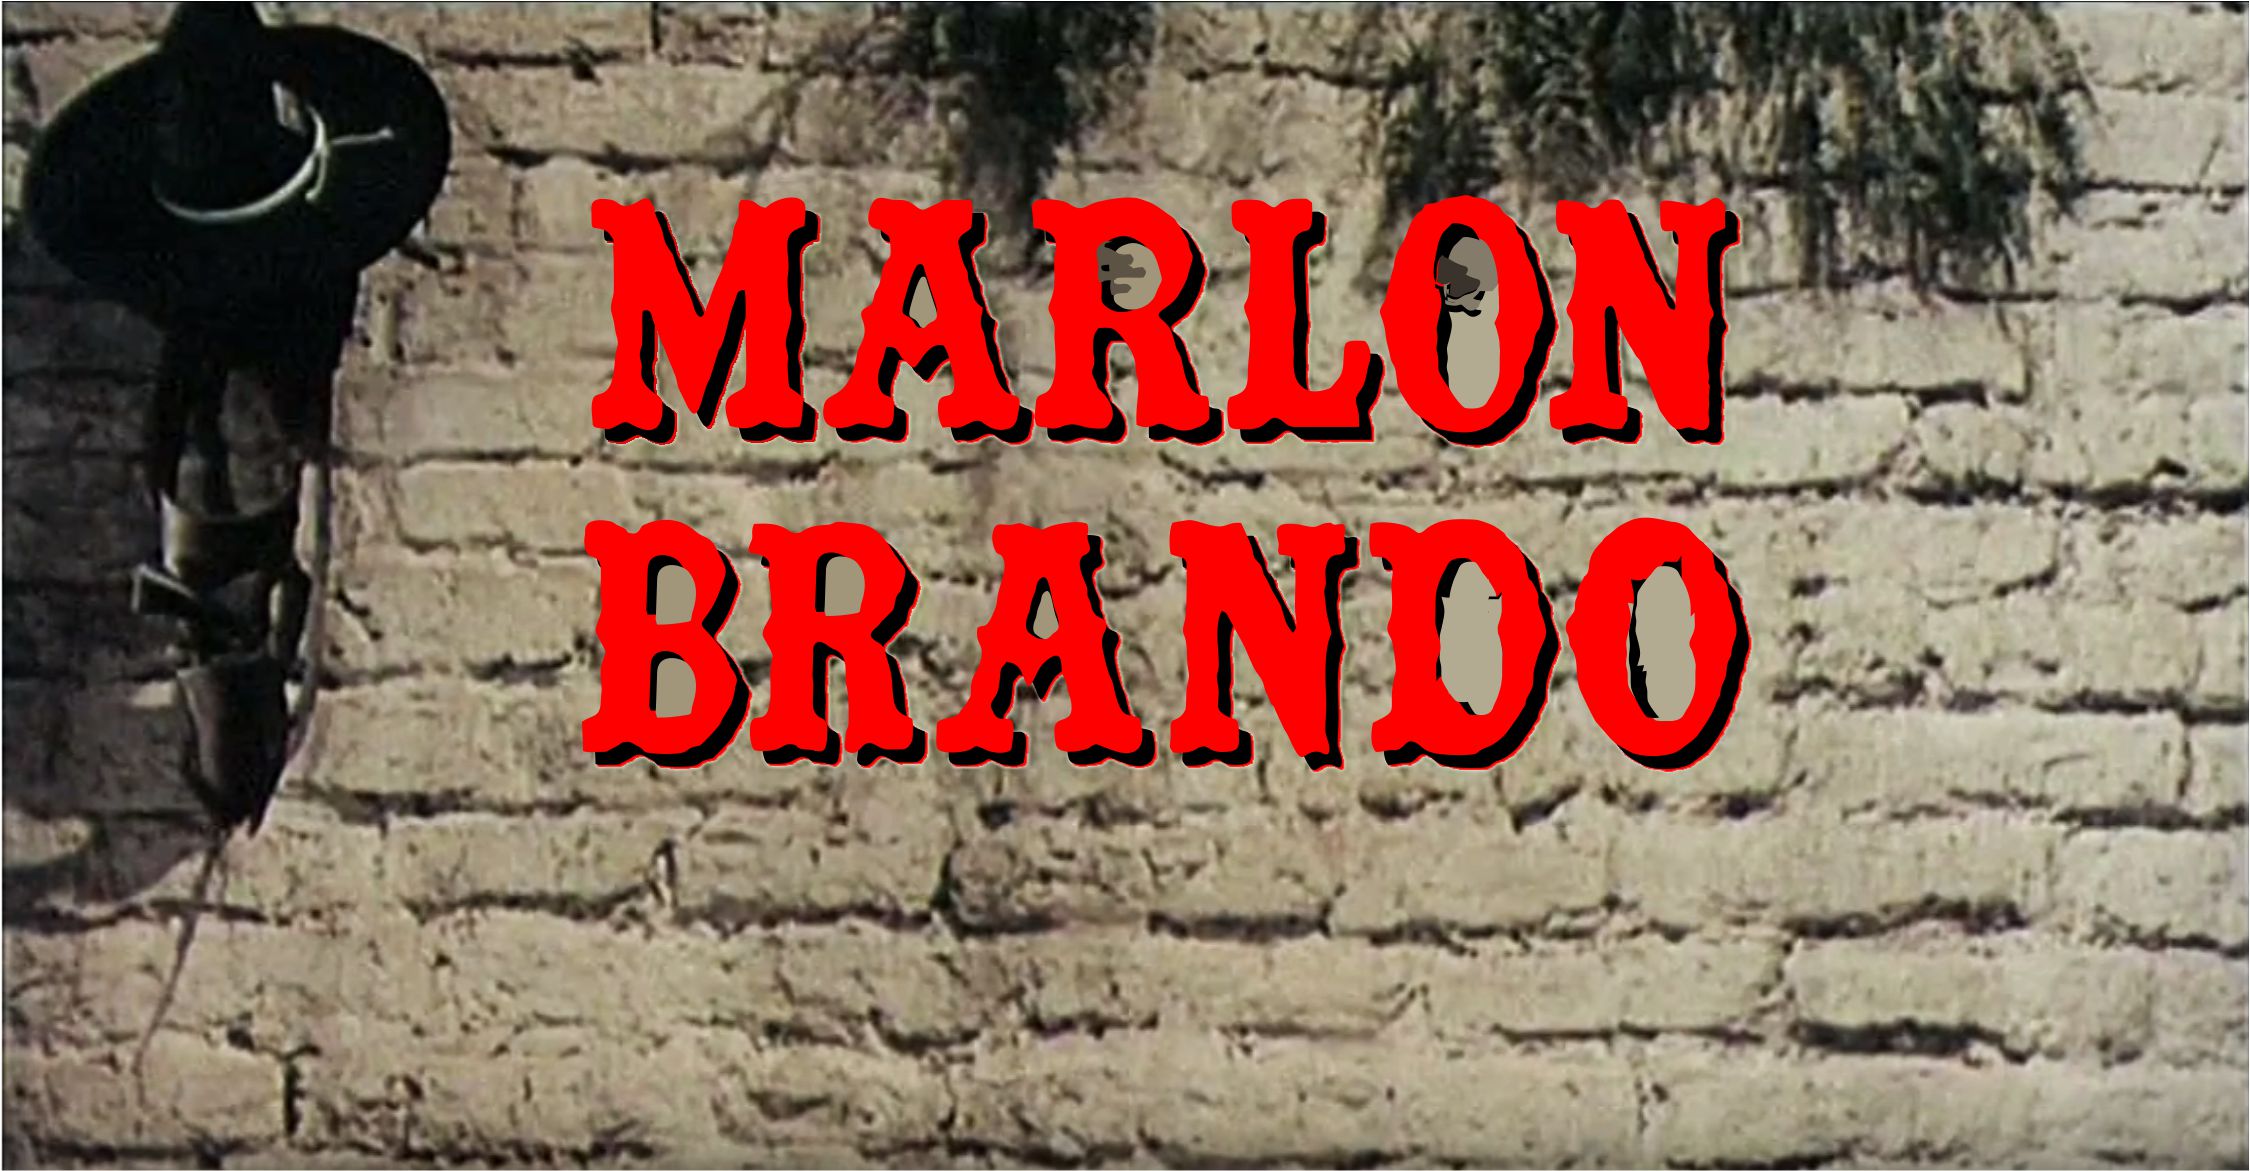 One Eyed Jacks Marlon Brando